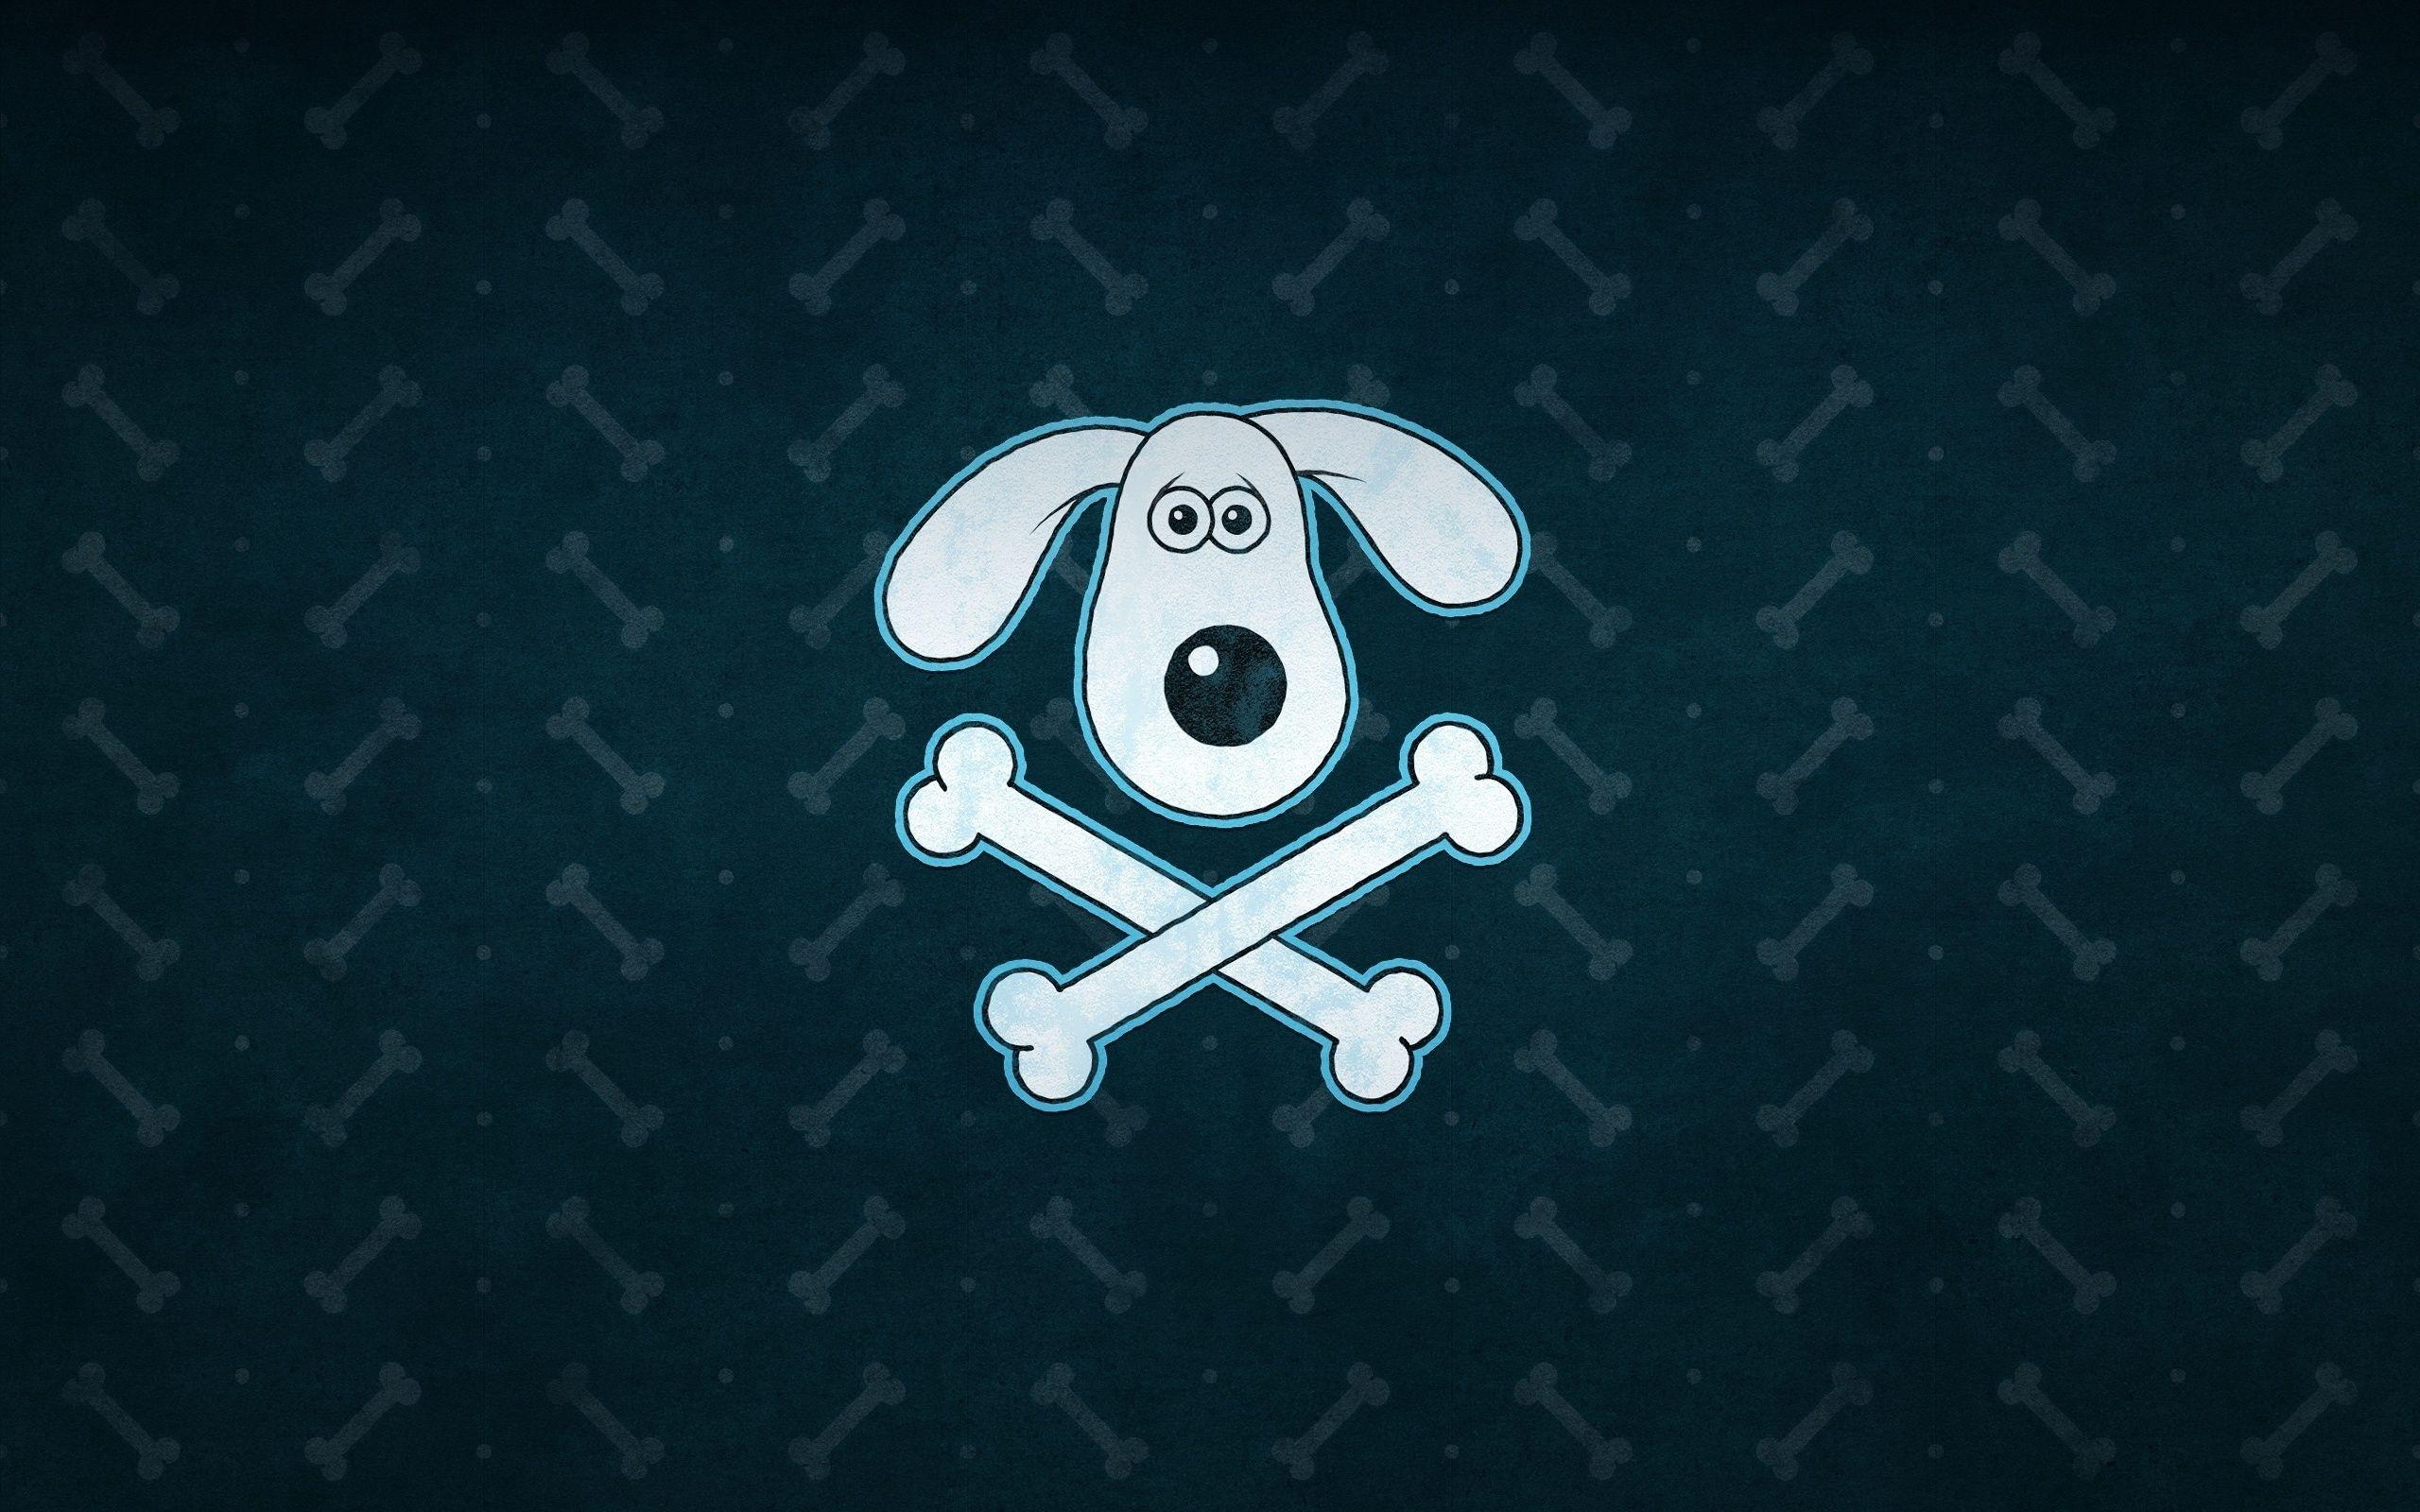 Dog Circle Logo - Wallpaper : illustration, logo, blue, dog, circle, vector, symbol ...